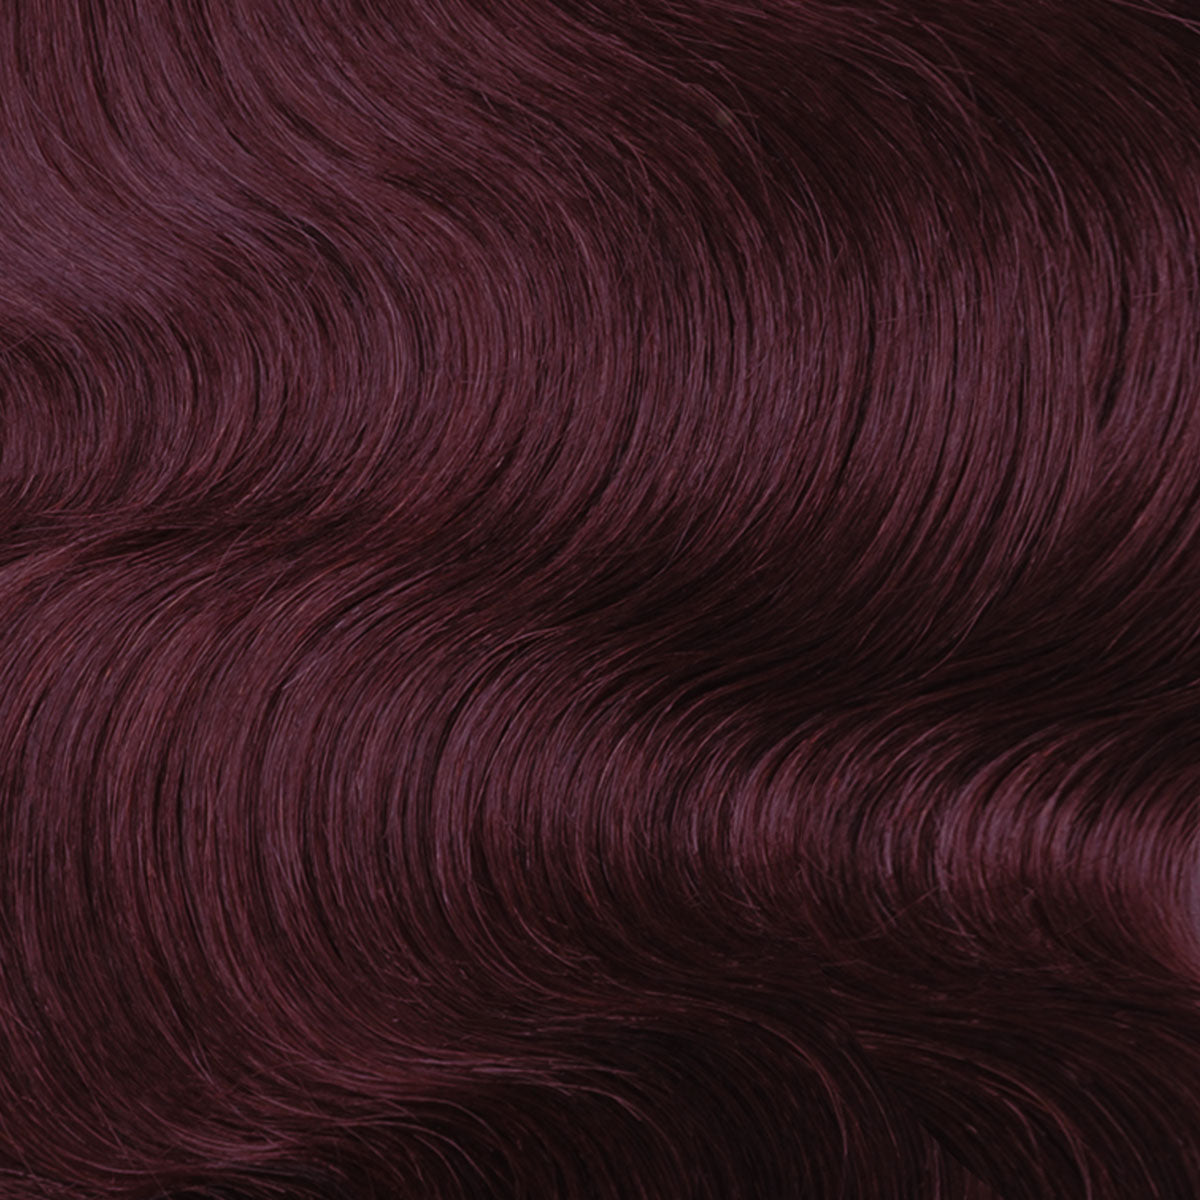 Keratin Bond Hair Extensions Mini Flat Tip #99j Burgundy